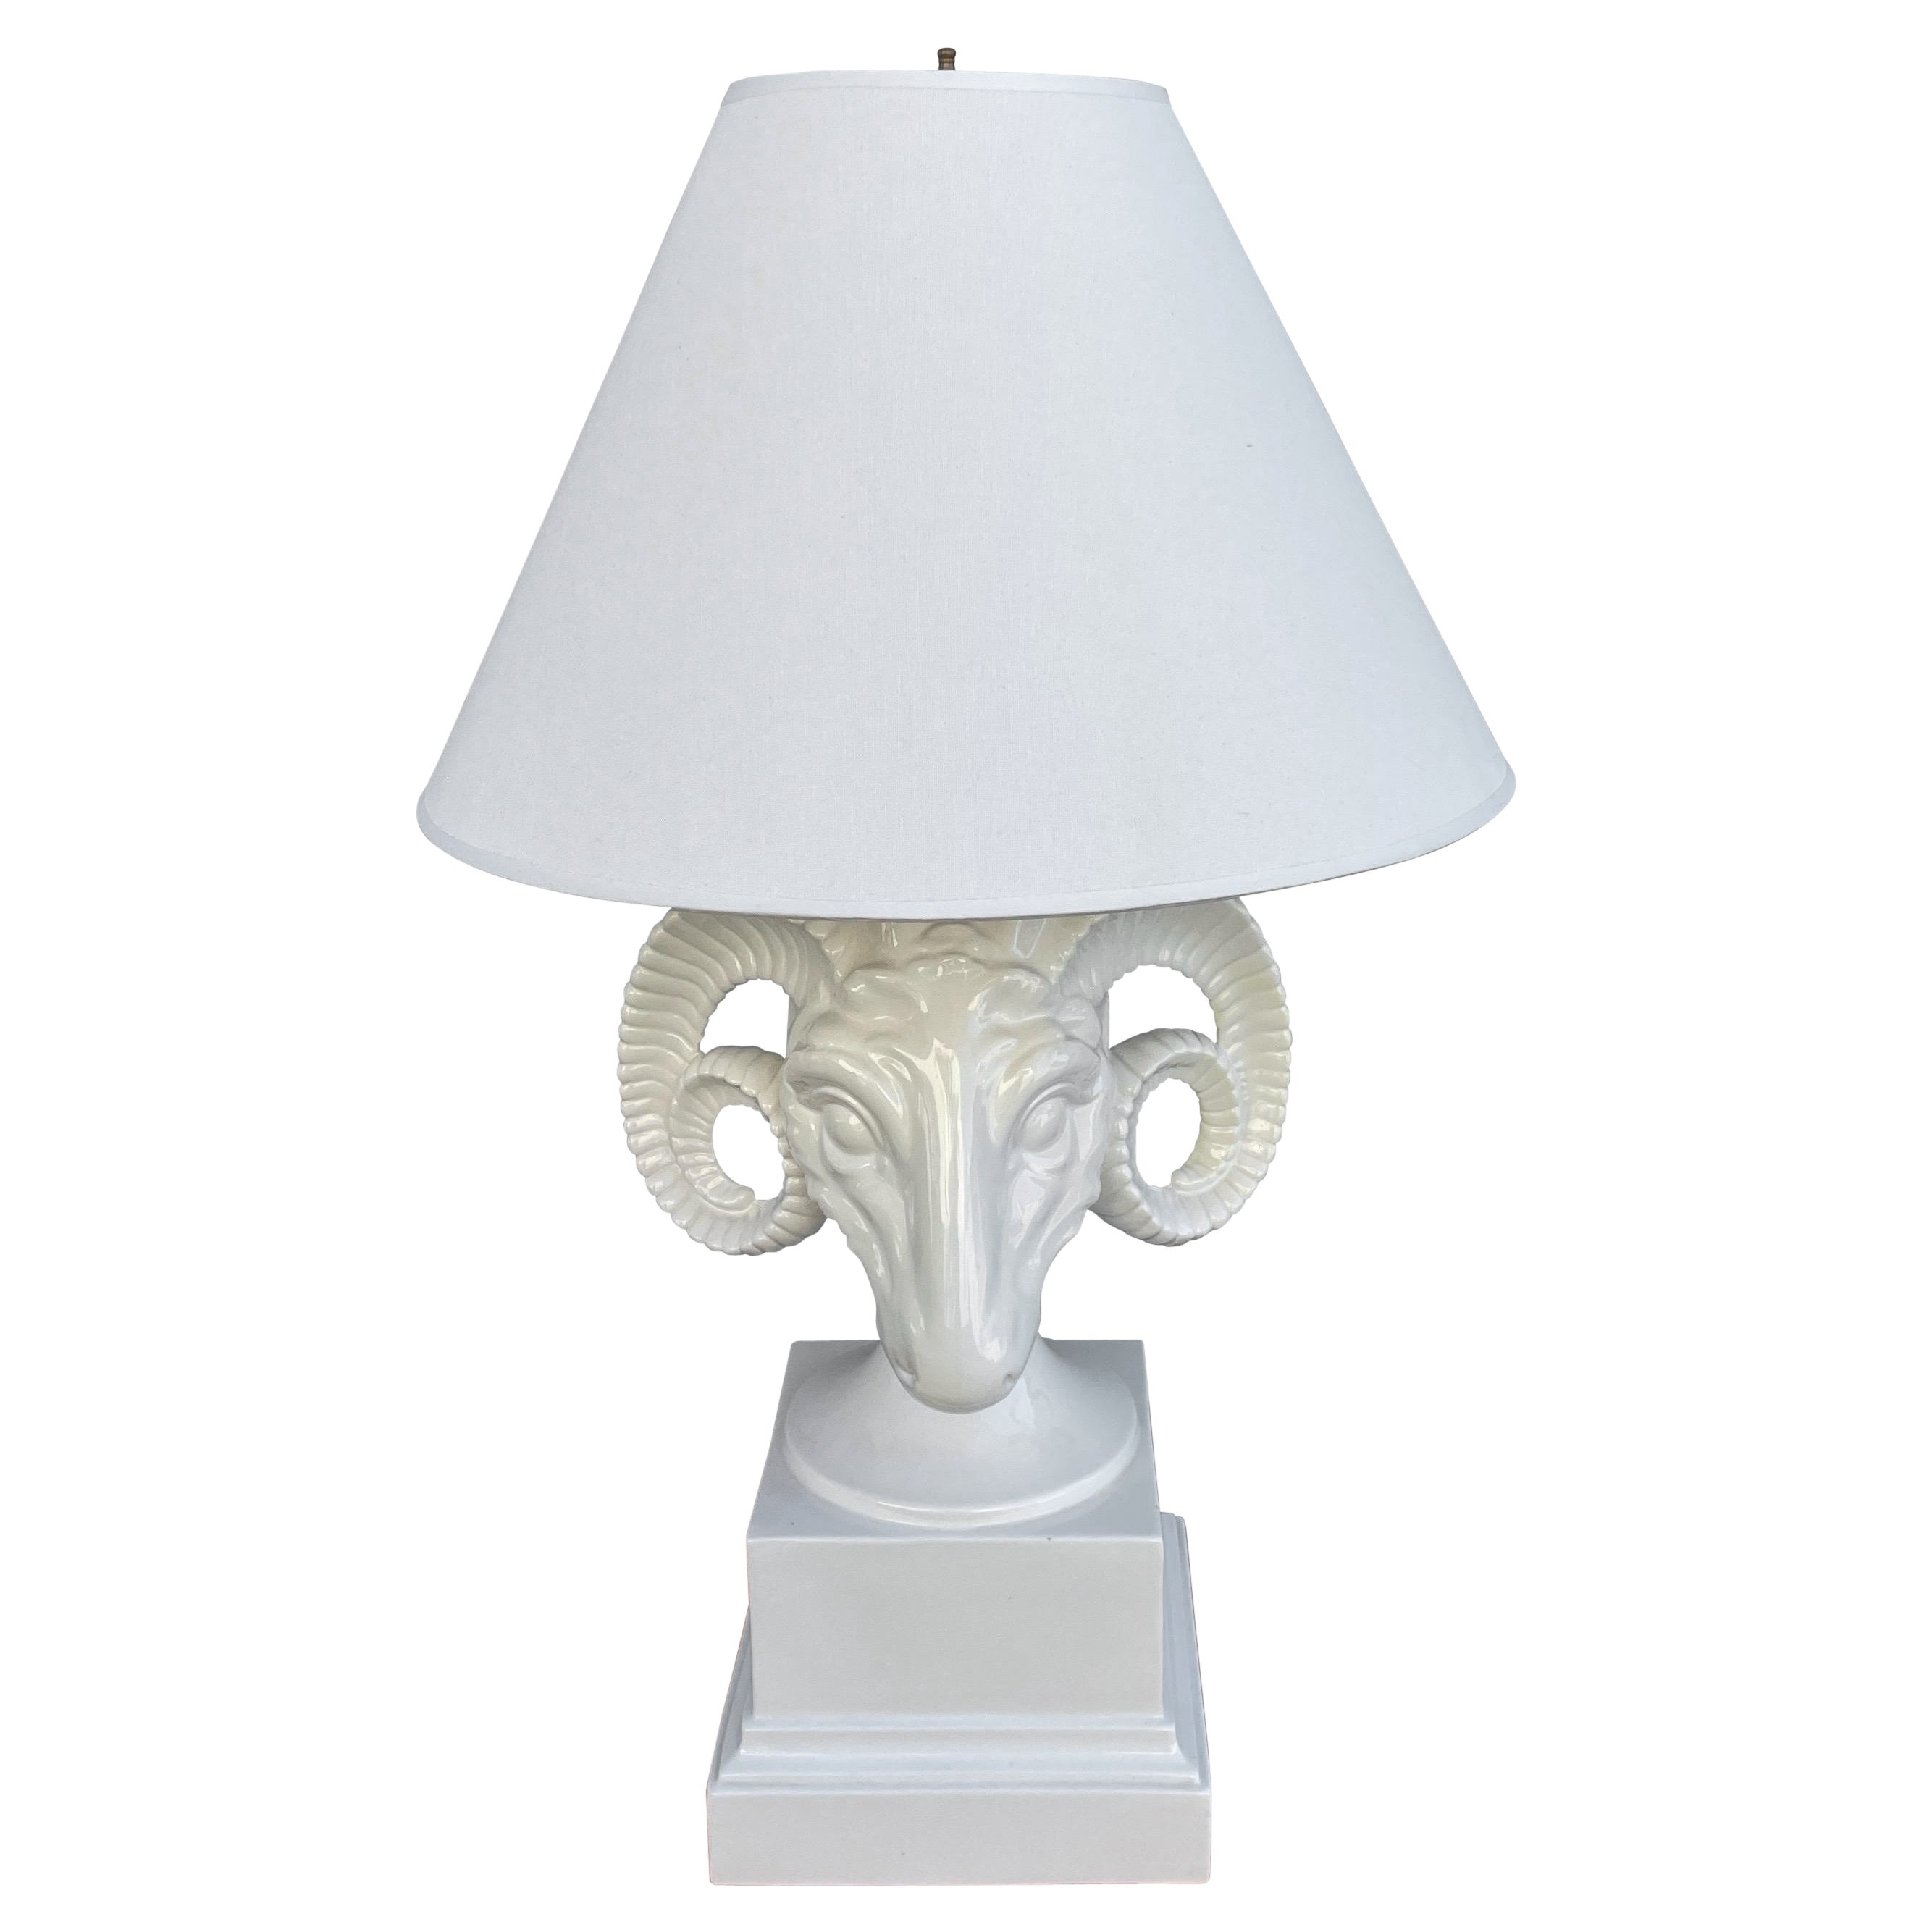 Vintage White Porcelain Ram's Head Lamp by Chapmam For Sale